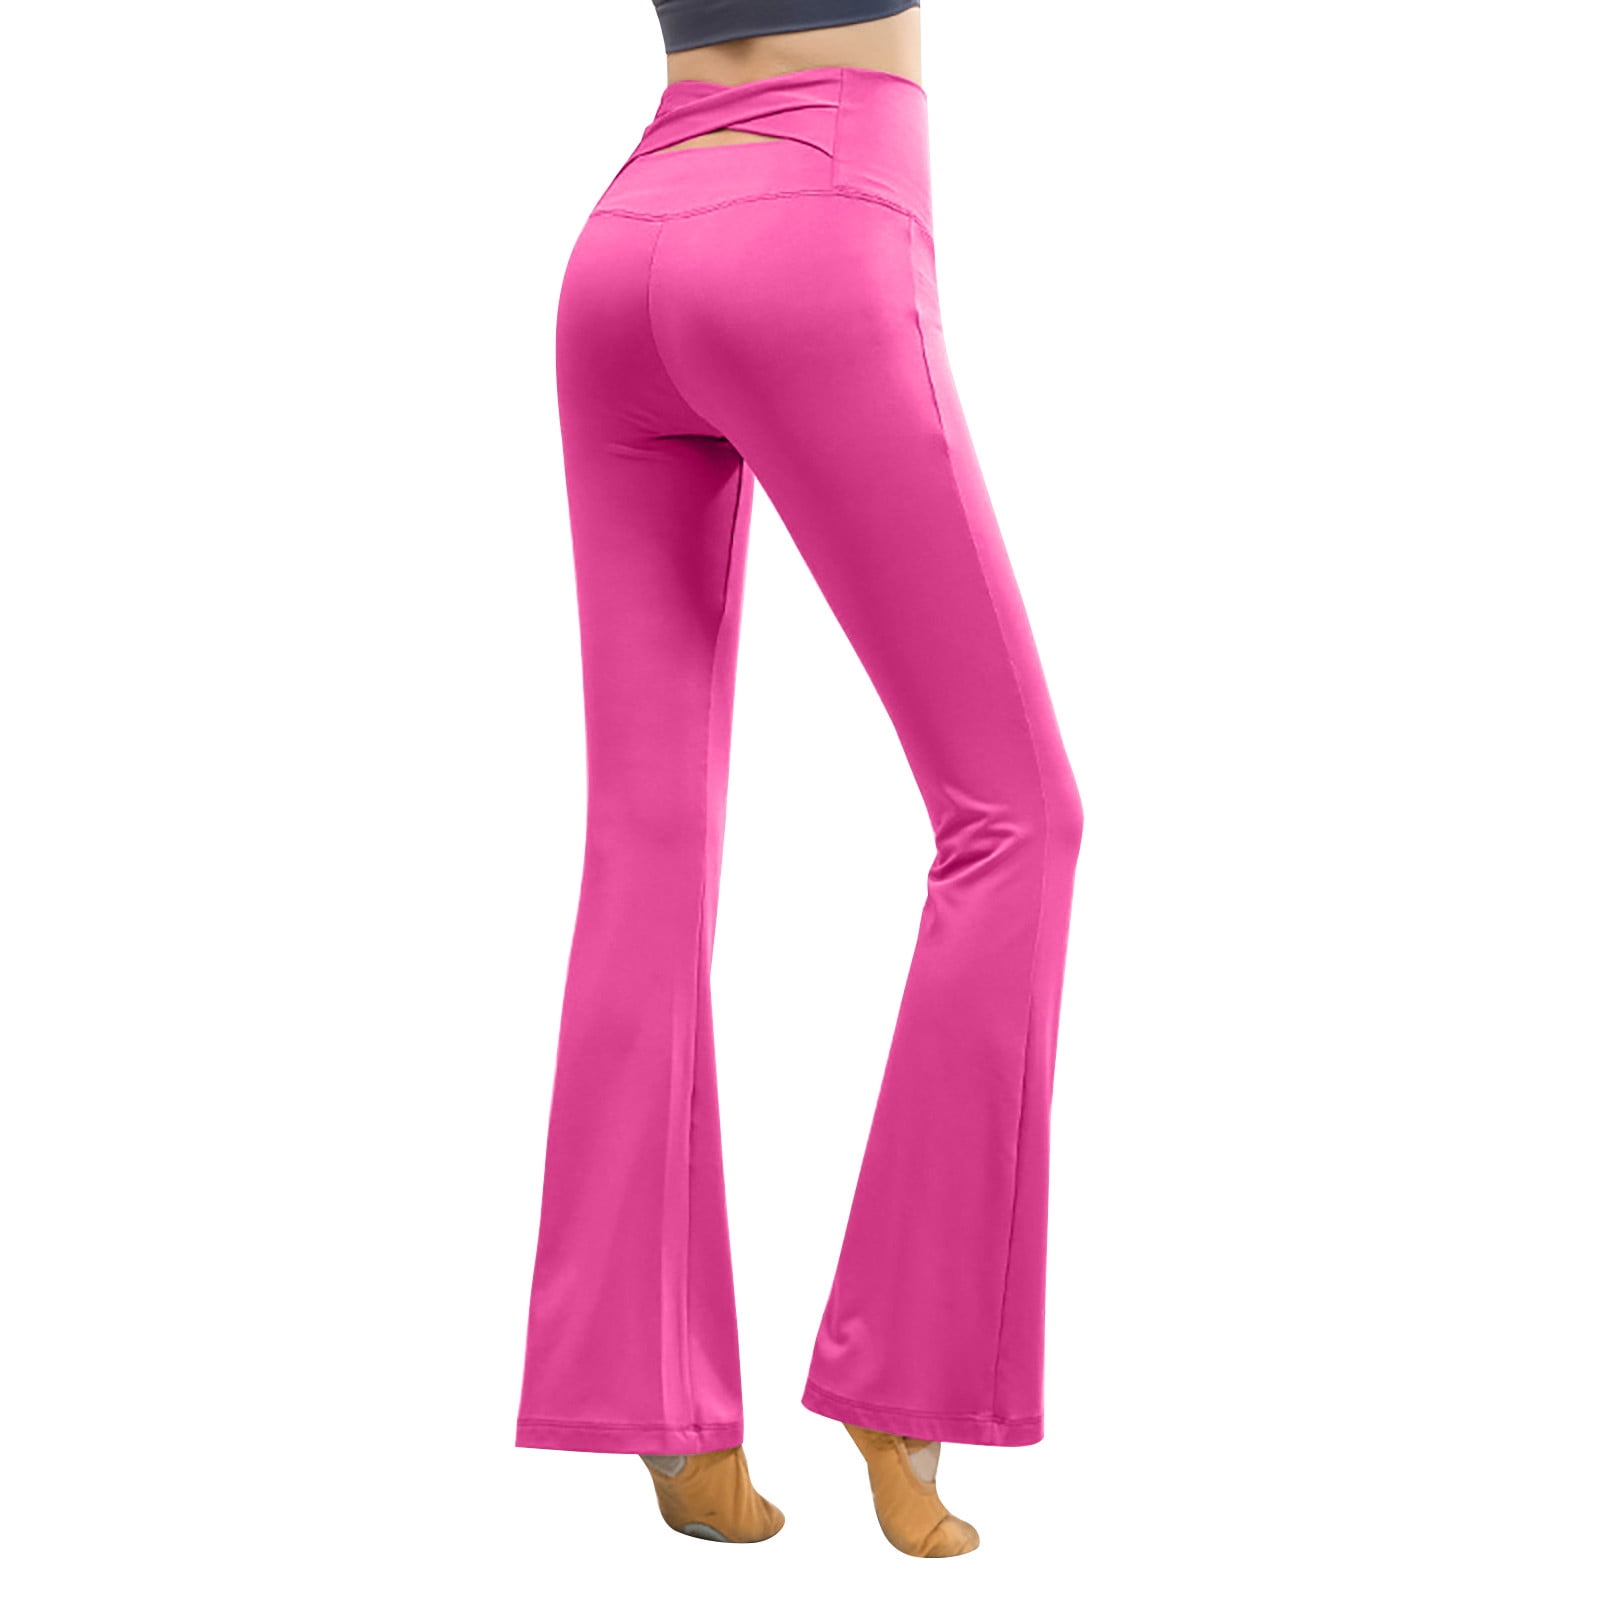 adviicd Yoga Pants Cotton Yoga Pants High Waist Yoga Pants with Pockets,  Tummy Control, Workout Pants for Women Yoga Leggings Hot Pink 2XL